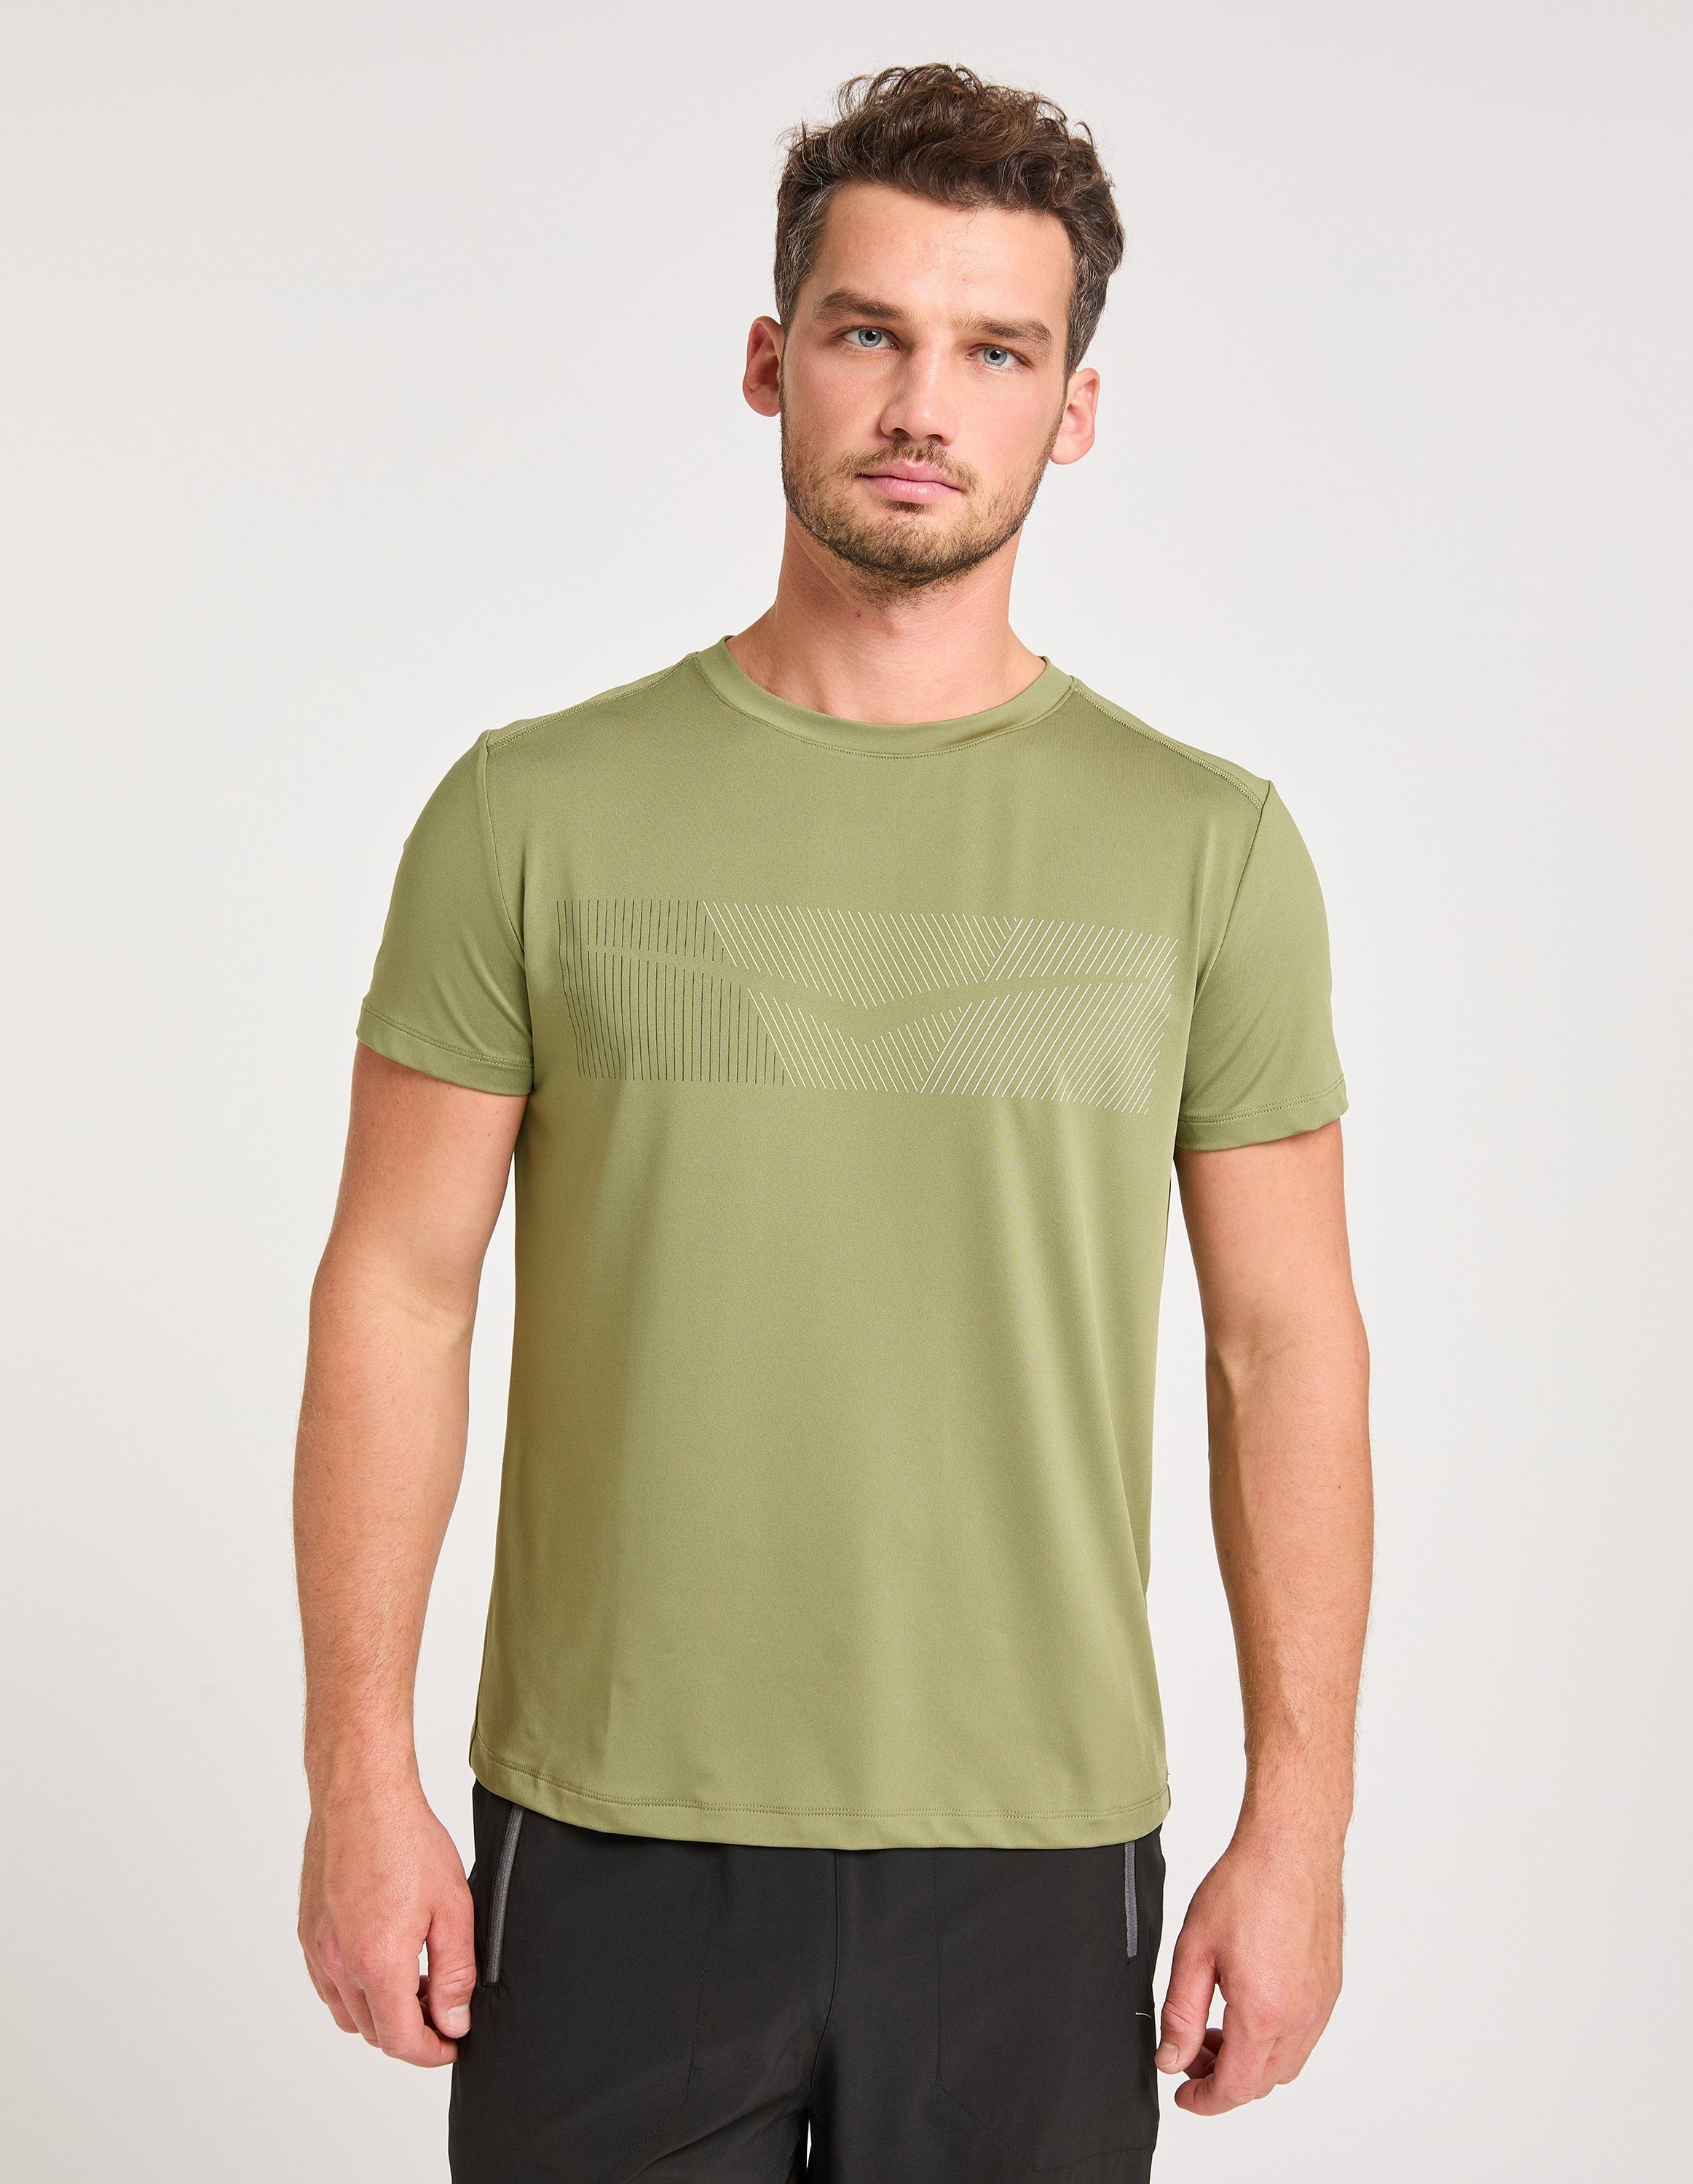 T-Shirt HAYES VB Venice Beach T-Shirt light Men olive